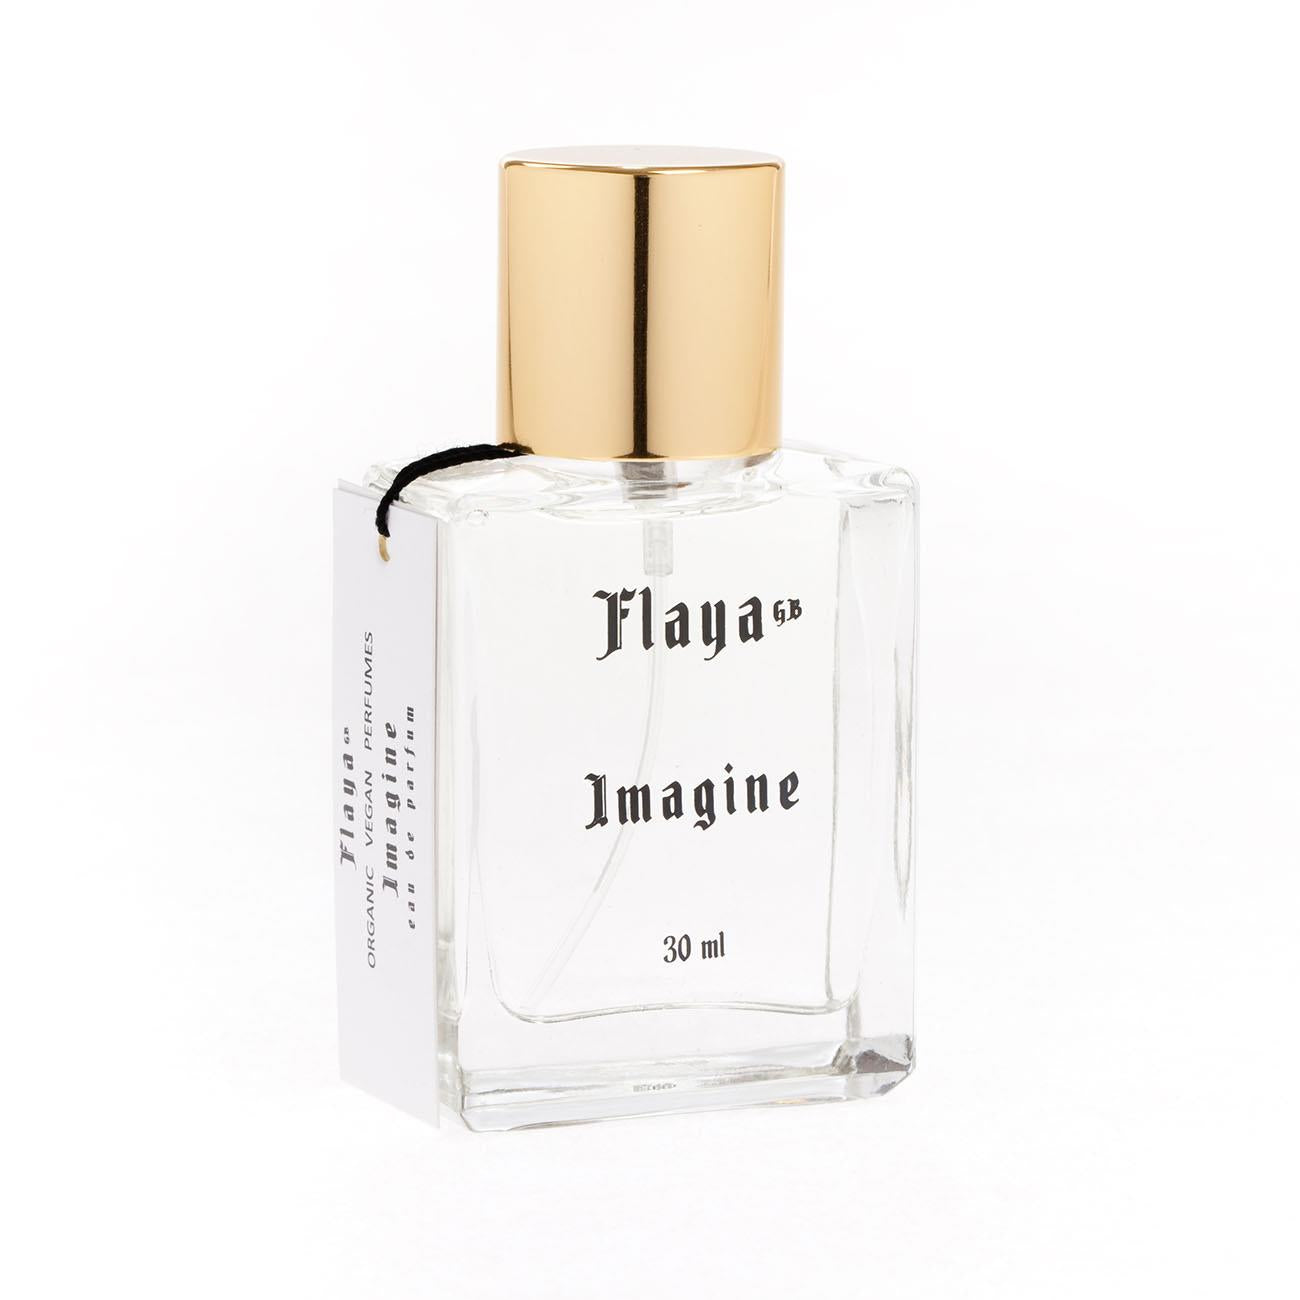 Imagine Perfume 30ml